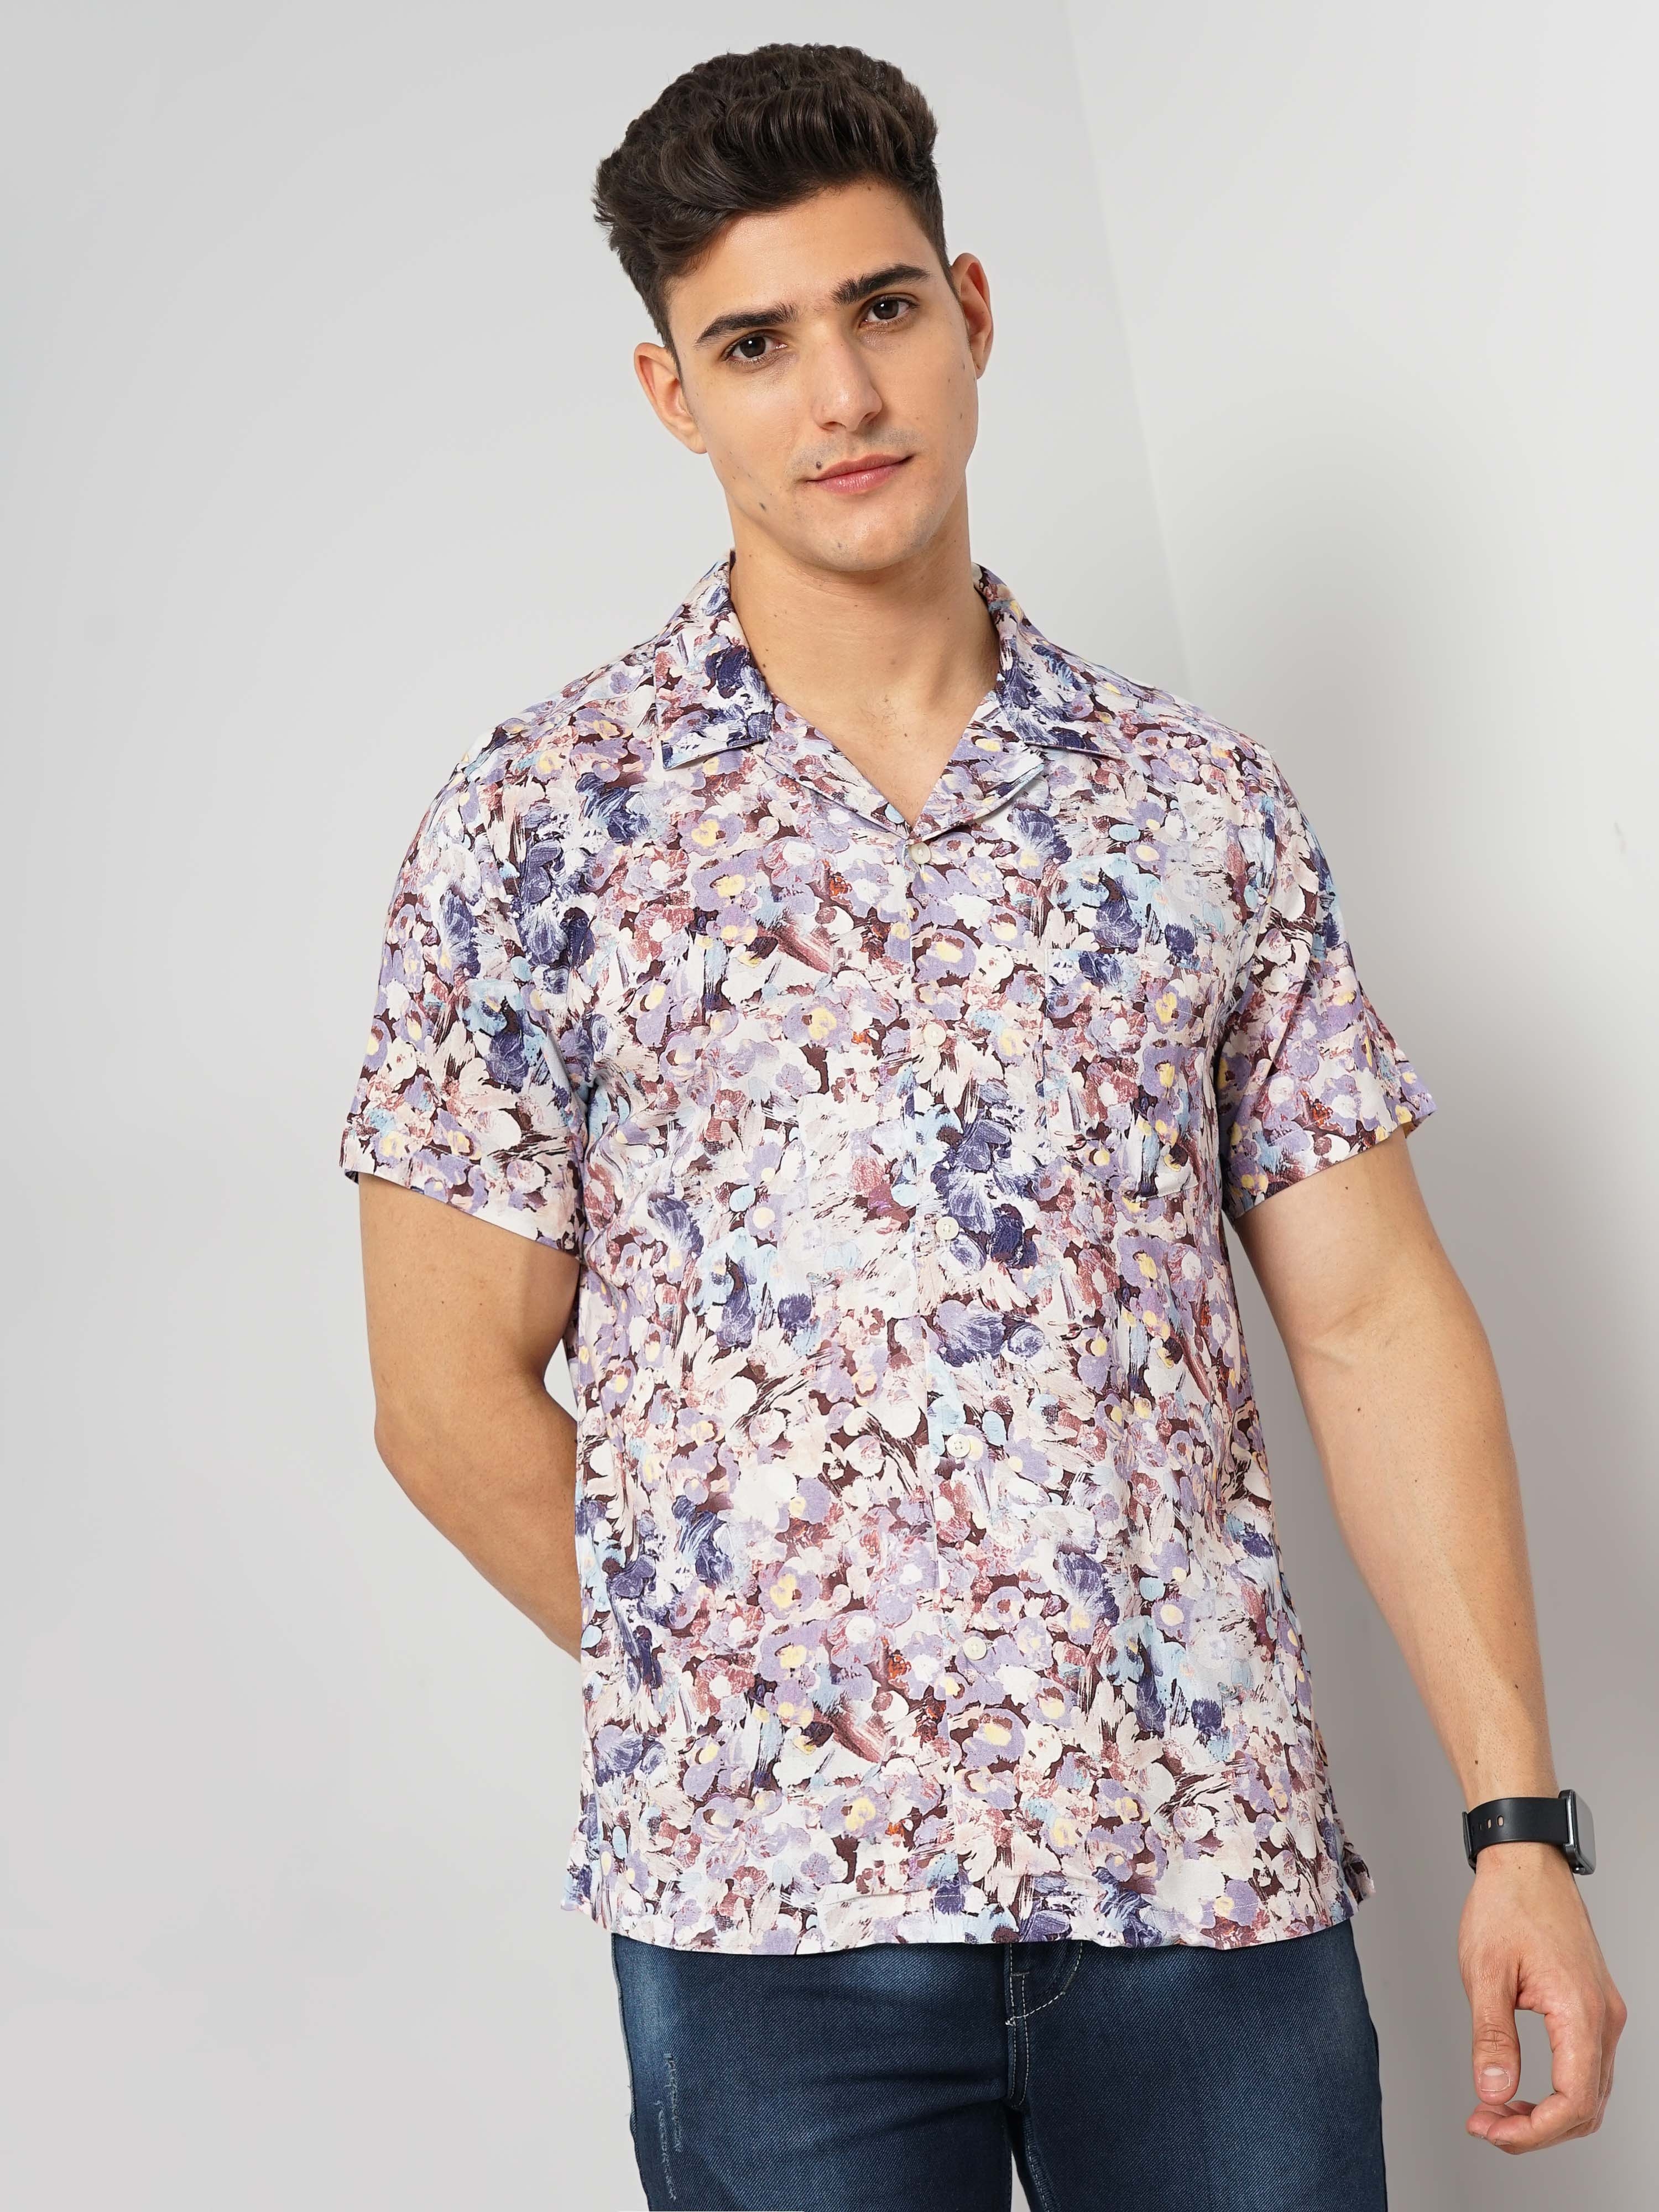 Celio Men's Abstract Multi Half Sleeve Soft Touch Shirt